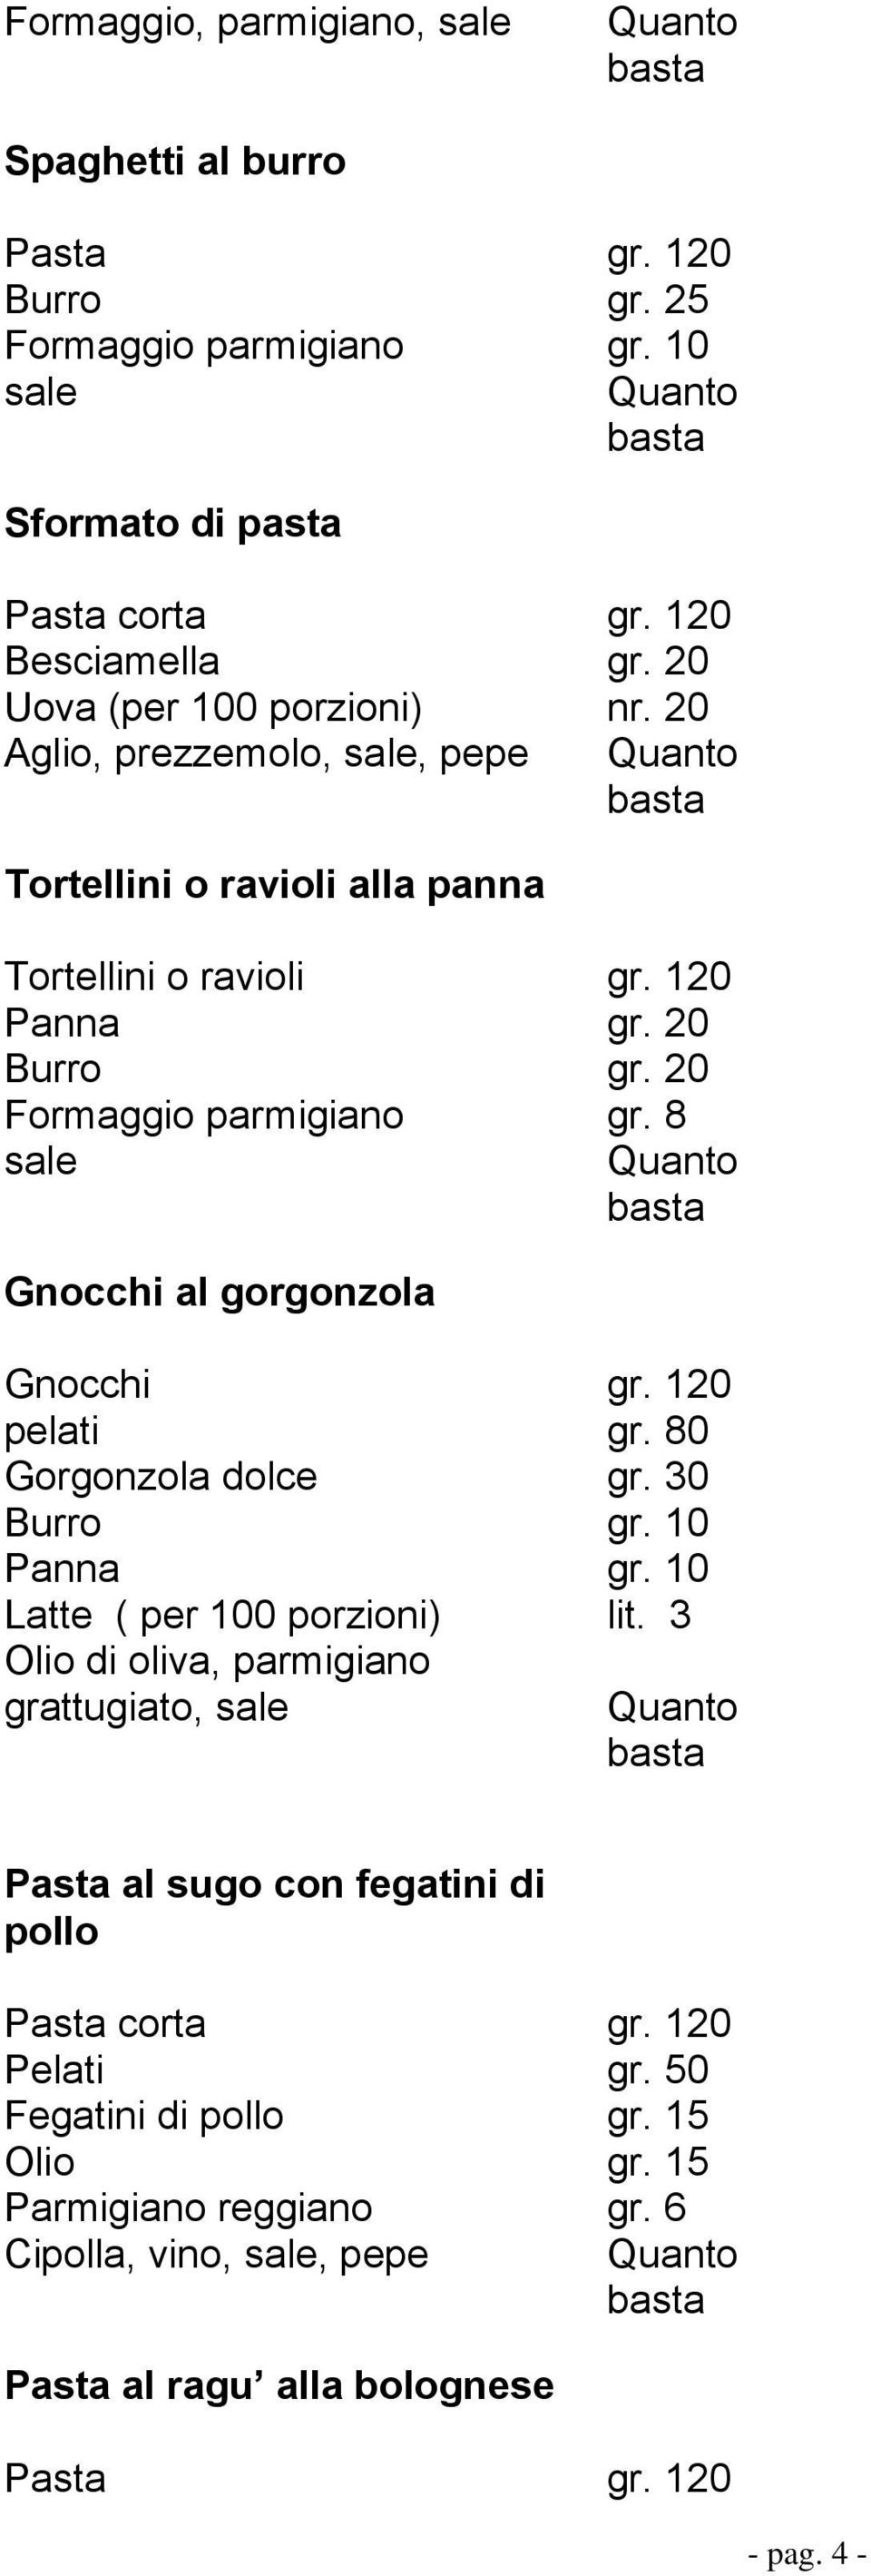 8 sale Gnocchi al gorgonzola Gnocchi gr. 120 pelati gr. 80 Gorgonzola dolce gr. 30 Burro gr. 10 Panna gr. 10 Latte ( per 100 porzioni) lit.